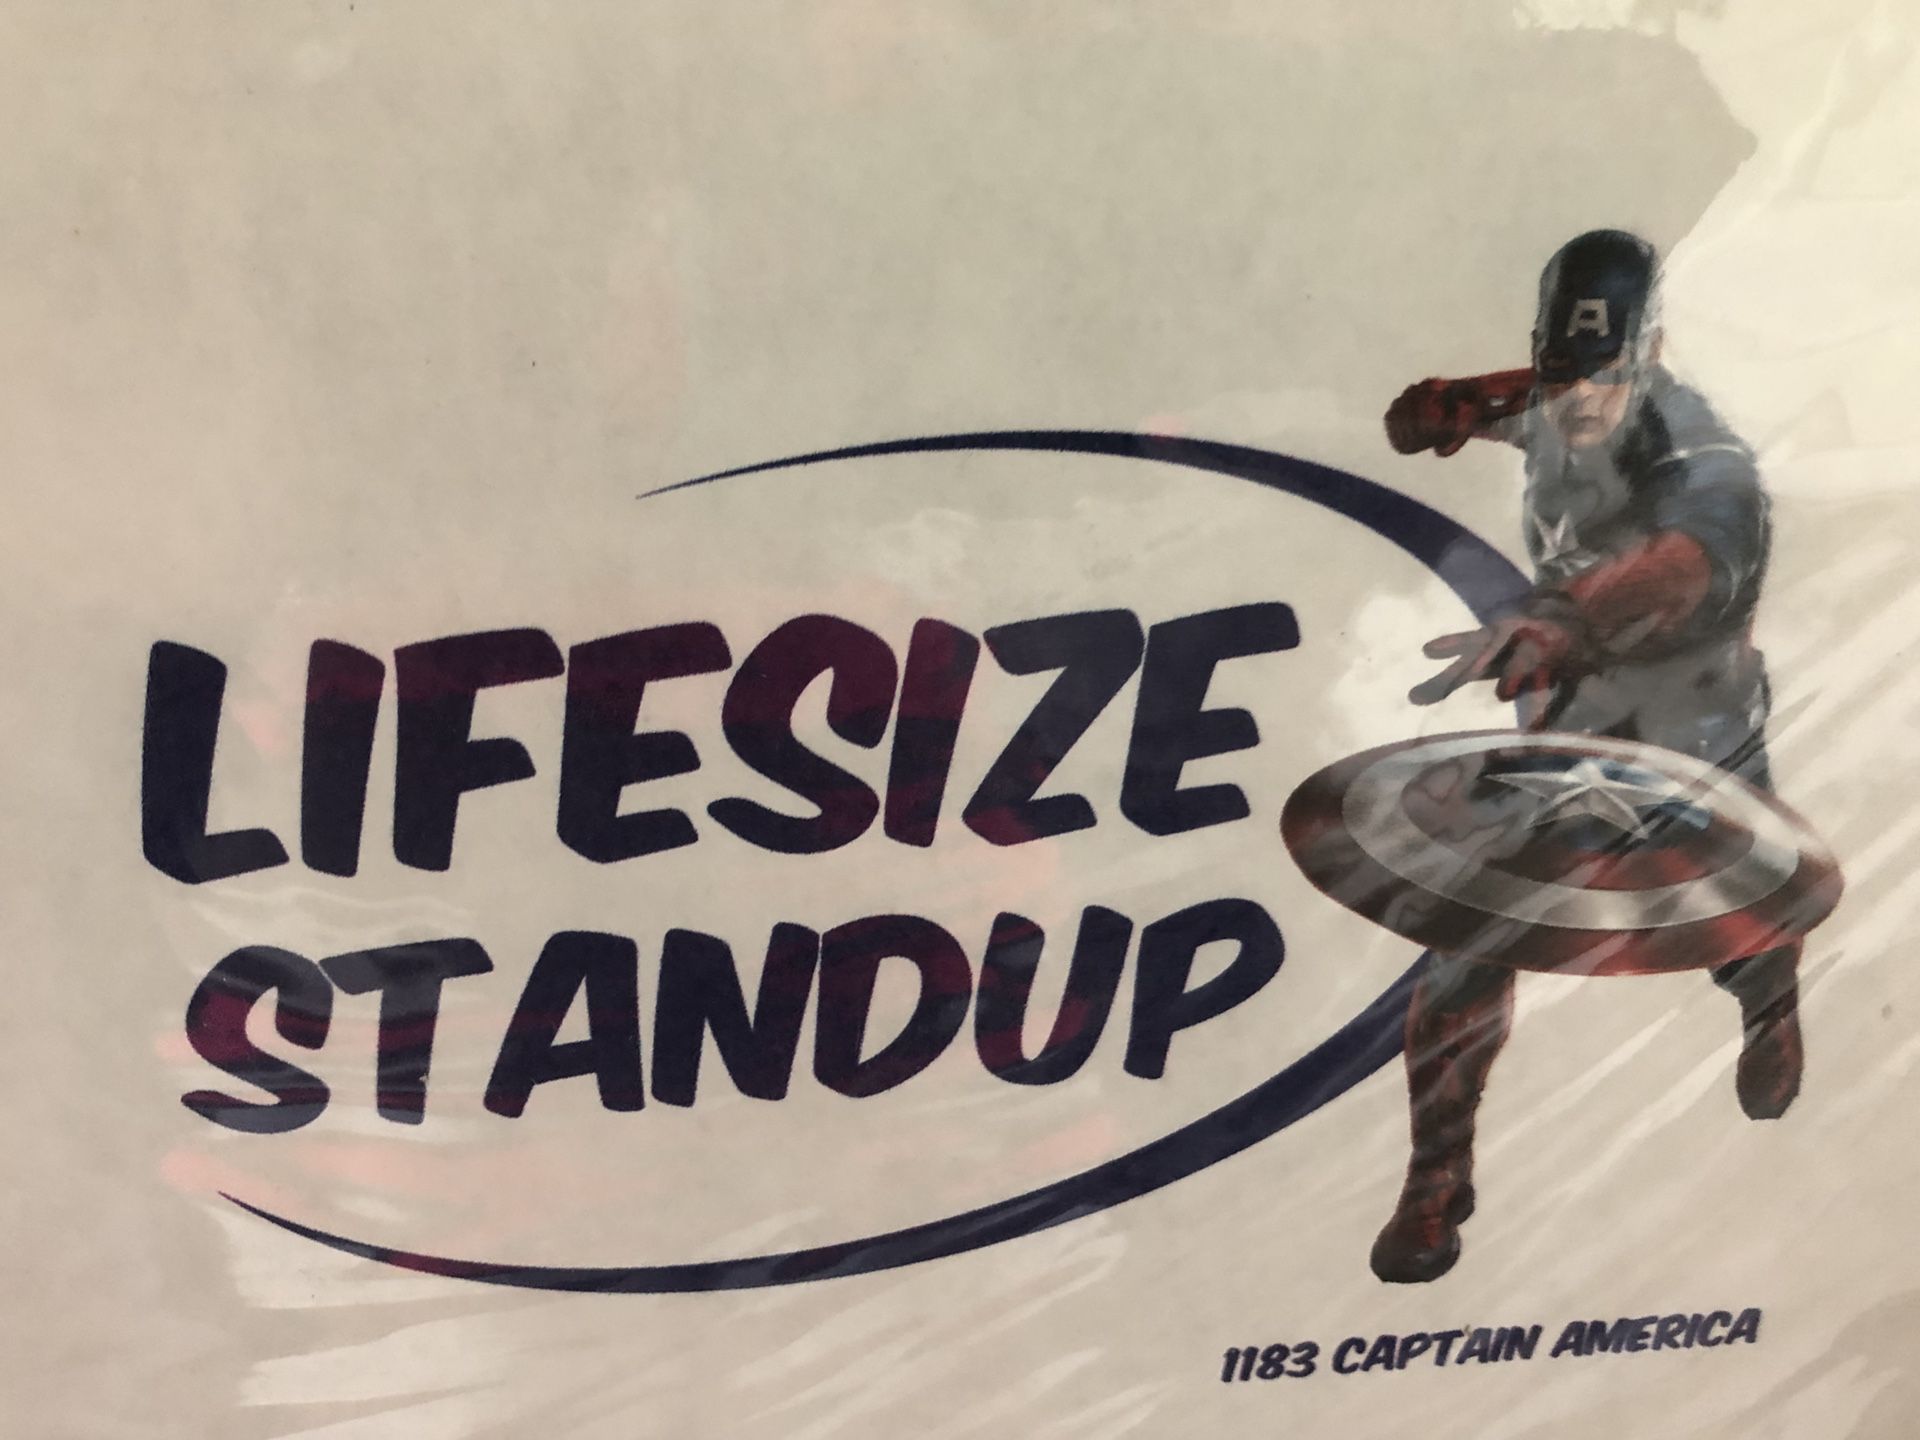 Captain America lifesize standups